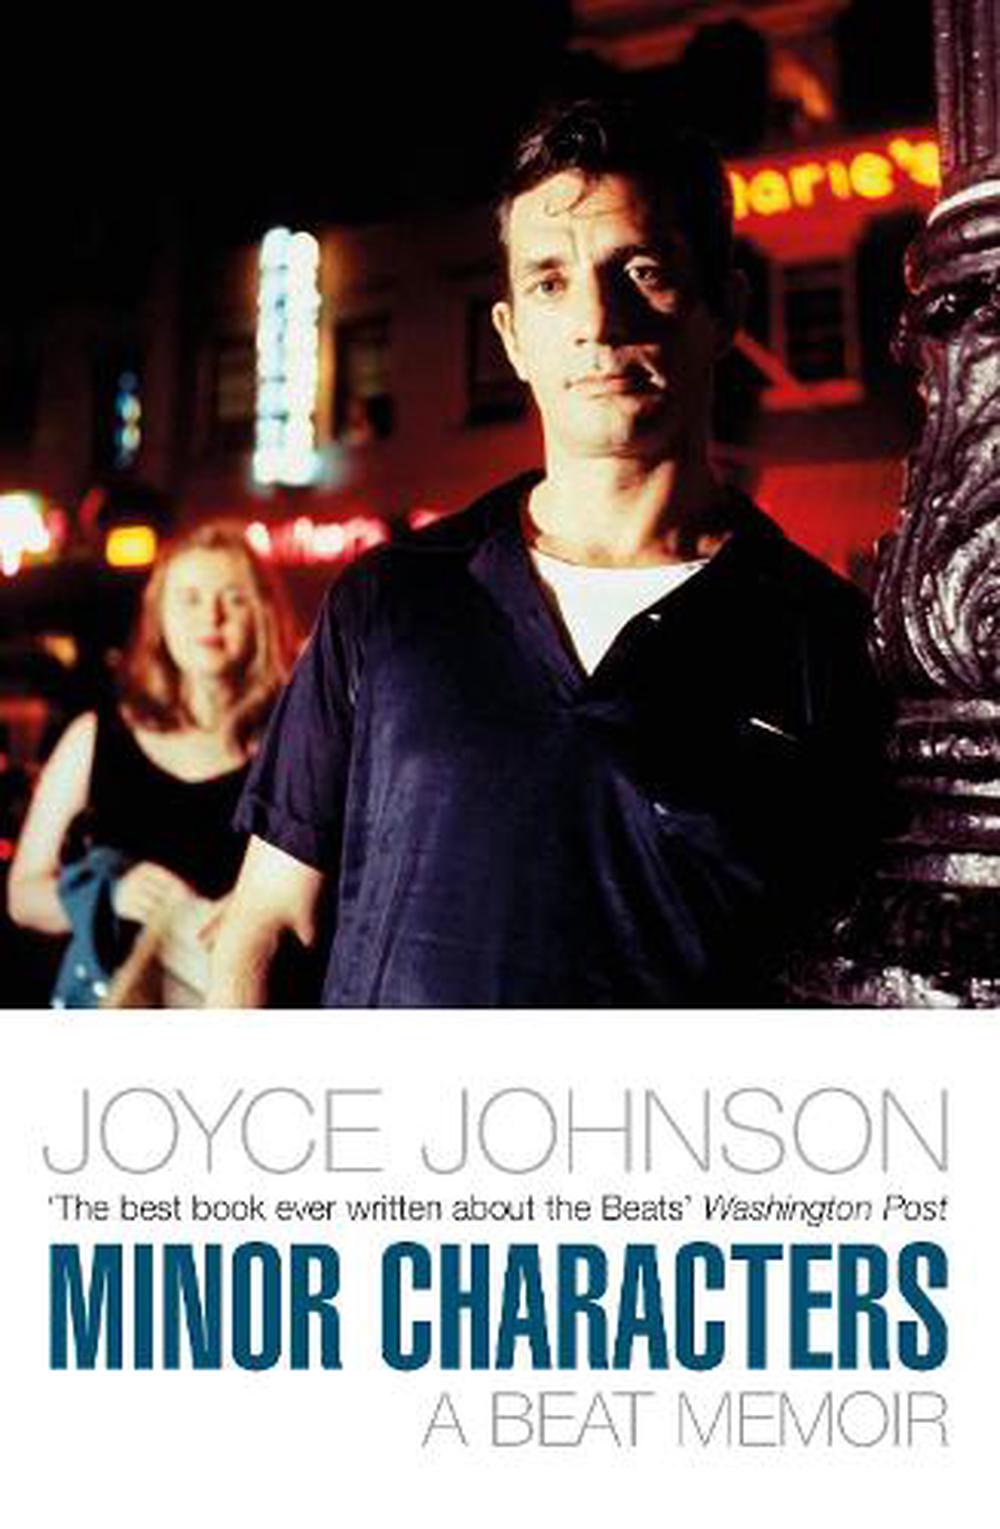 minor characters by joyce johnson